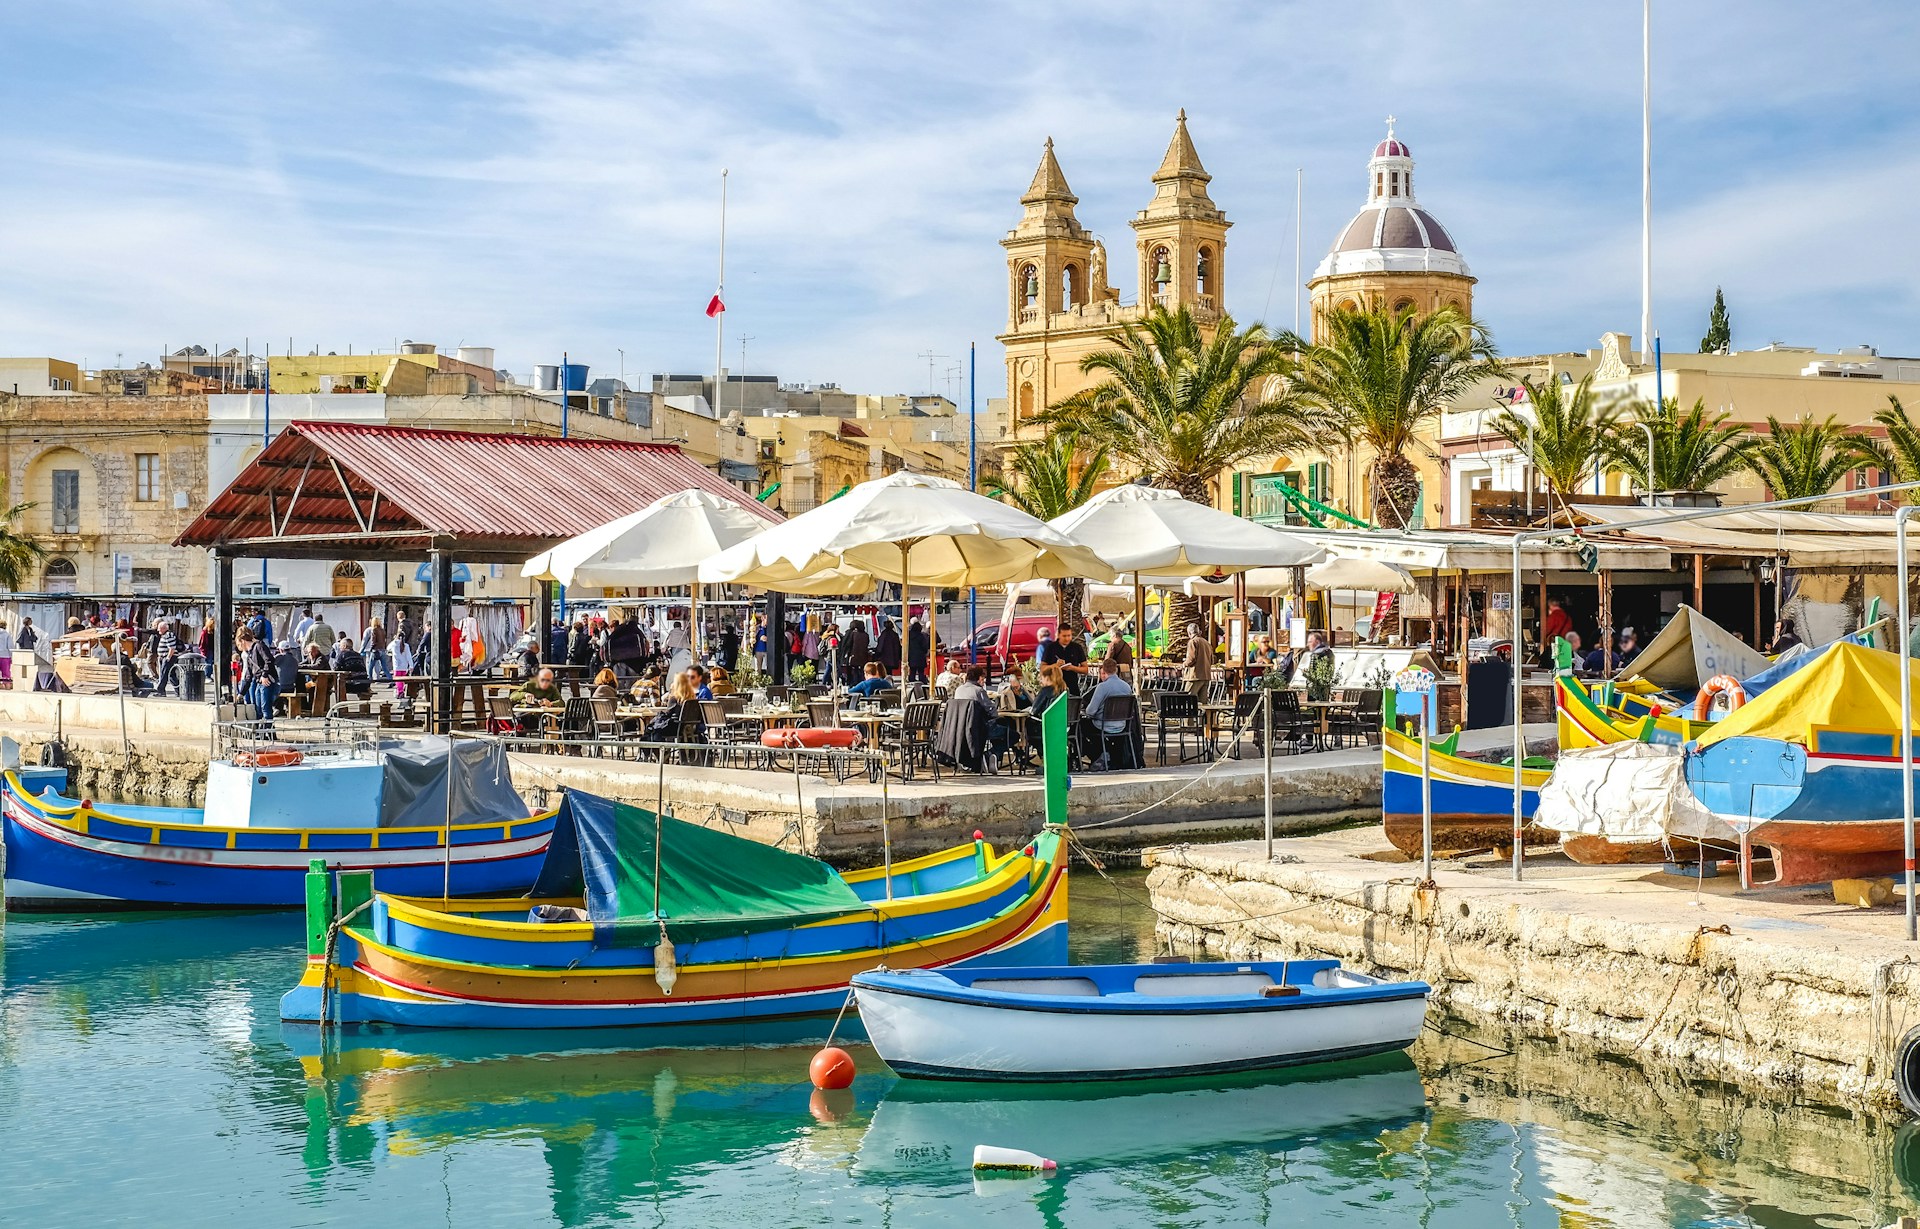 the island of Malta